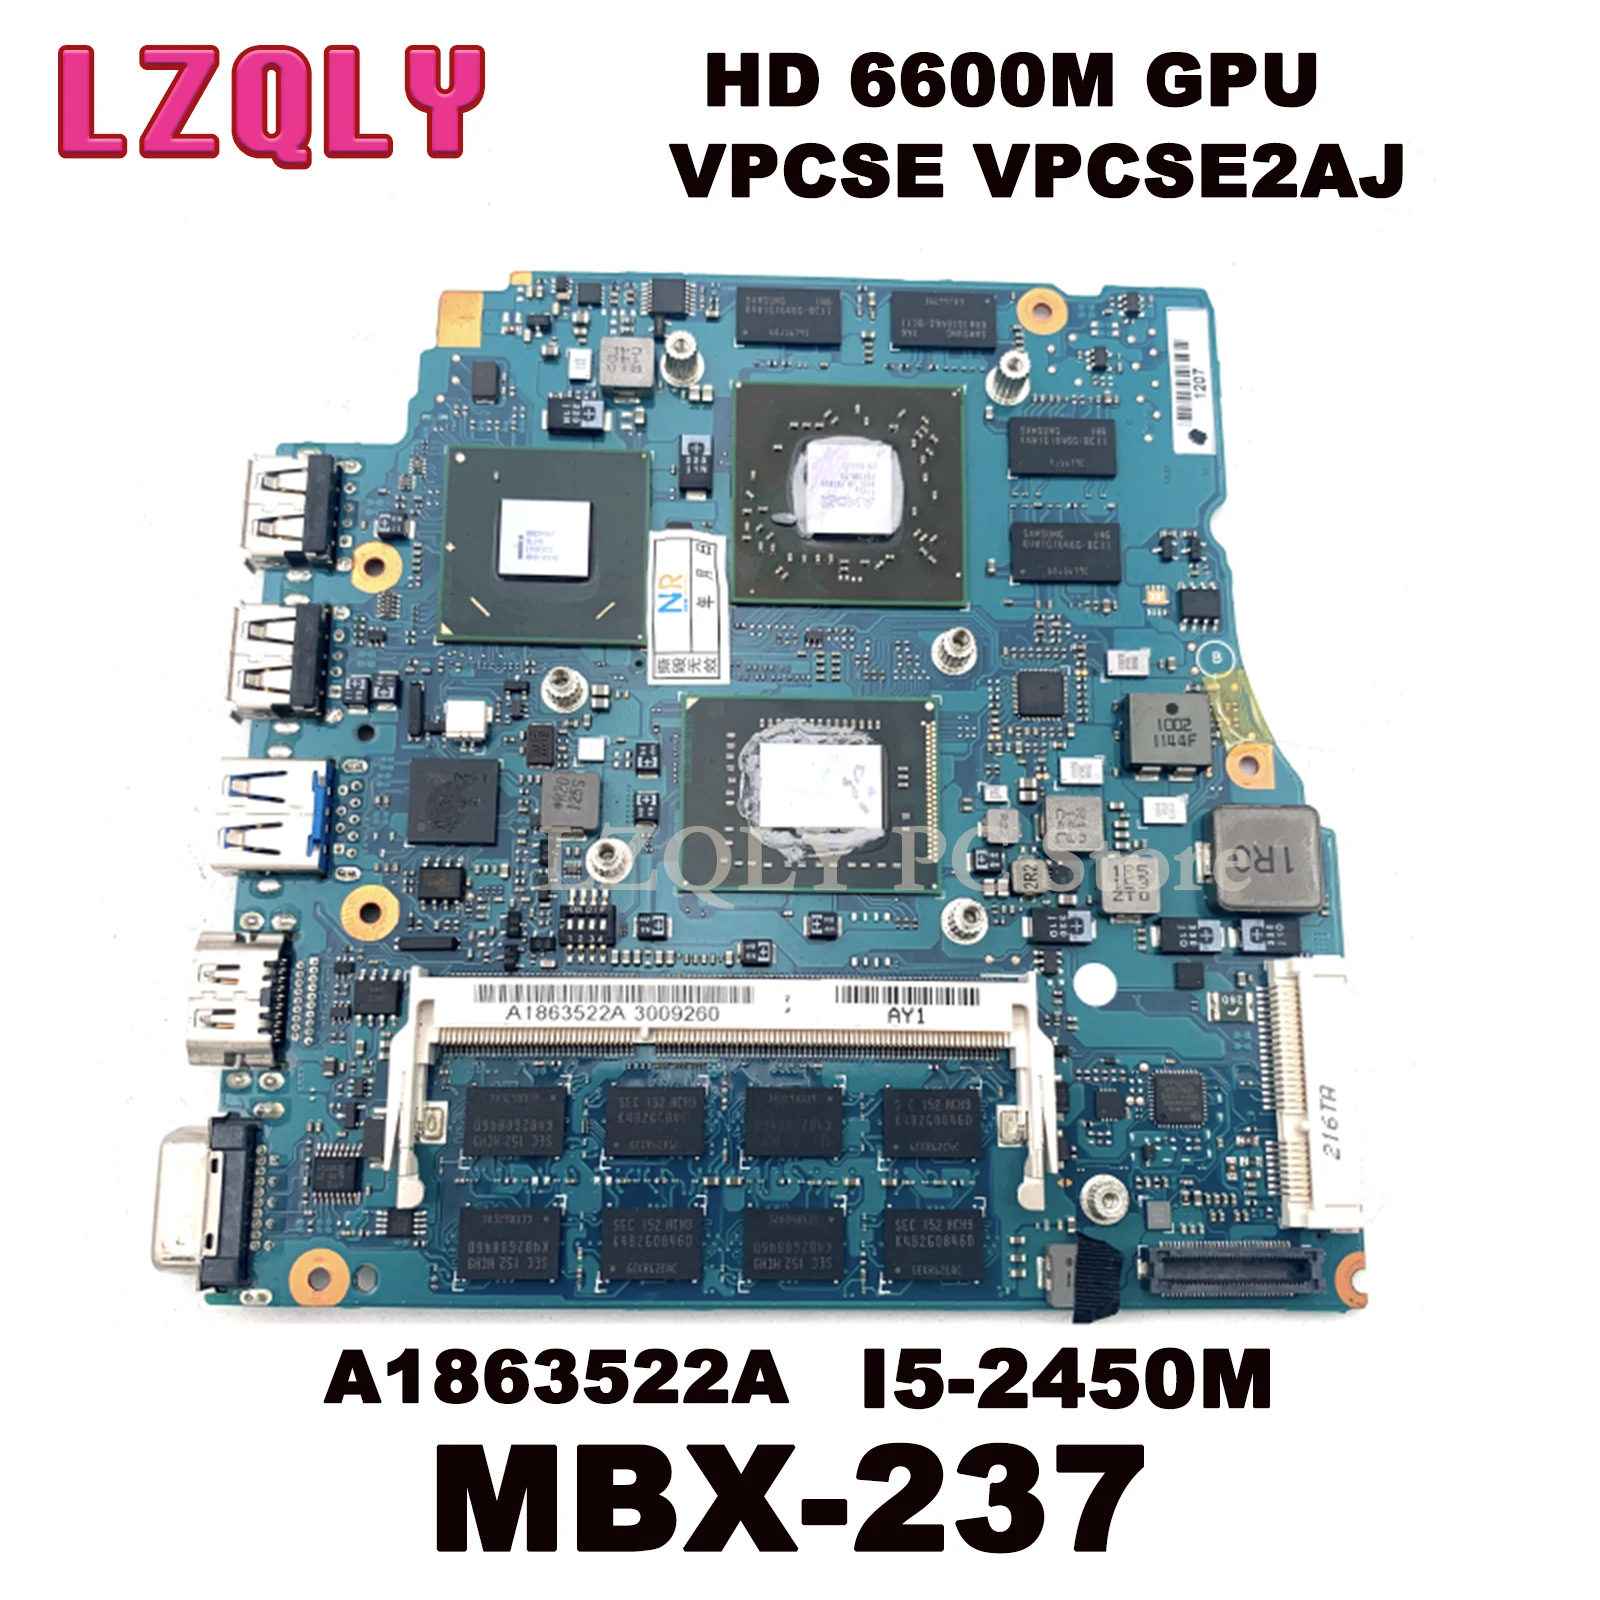 

LZQLY For VPCSE VPCSE2AJ A1863522A MBX-237 System Board Laptop Motherboard I5-2450m 2.50Ghz HD 6600M GPU Main Board